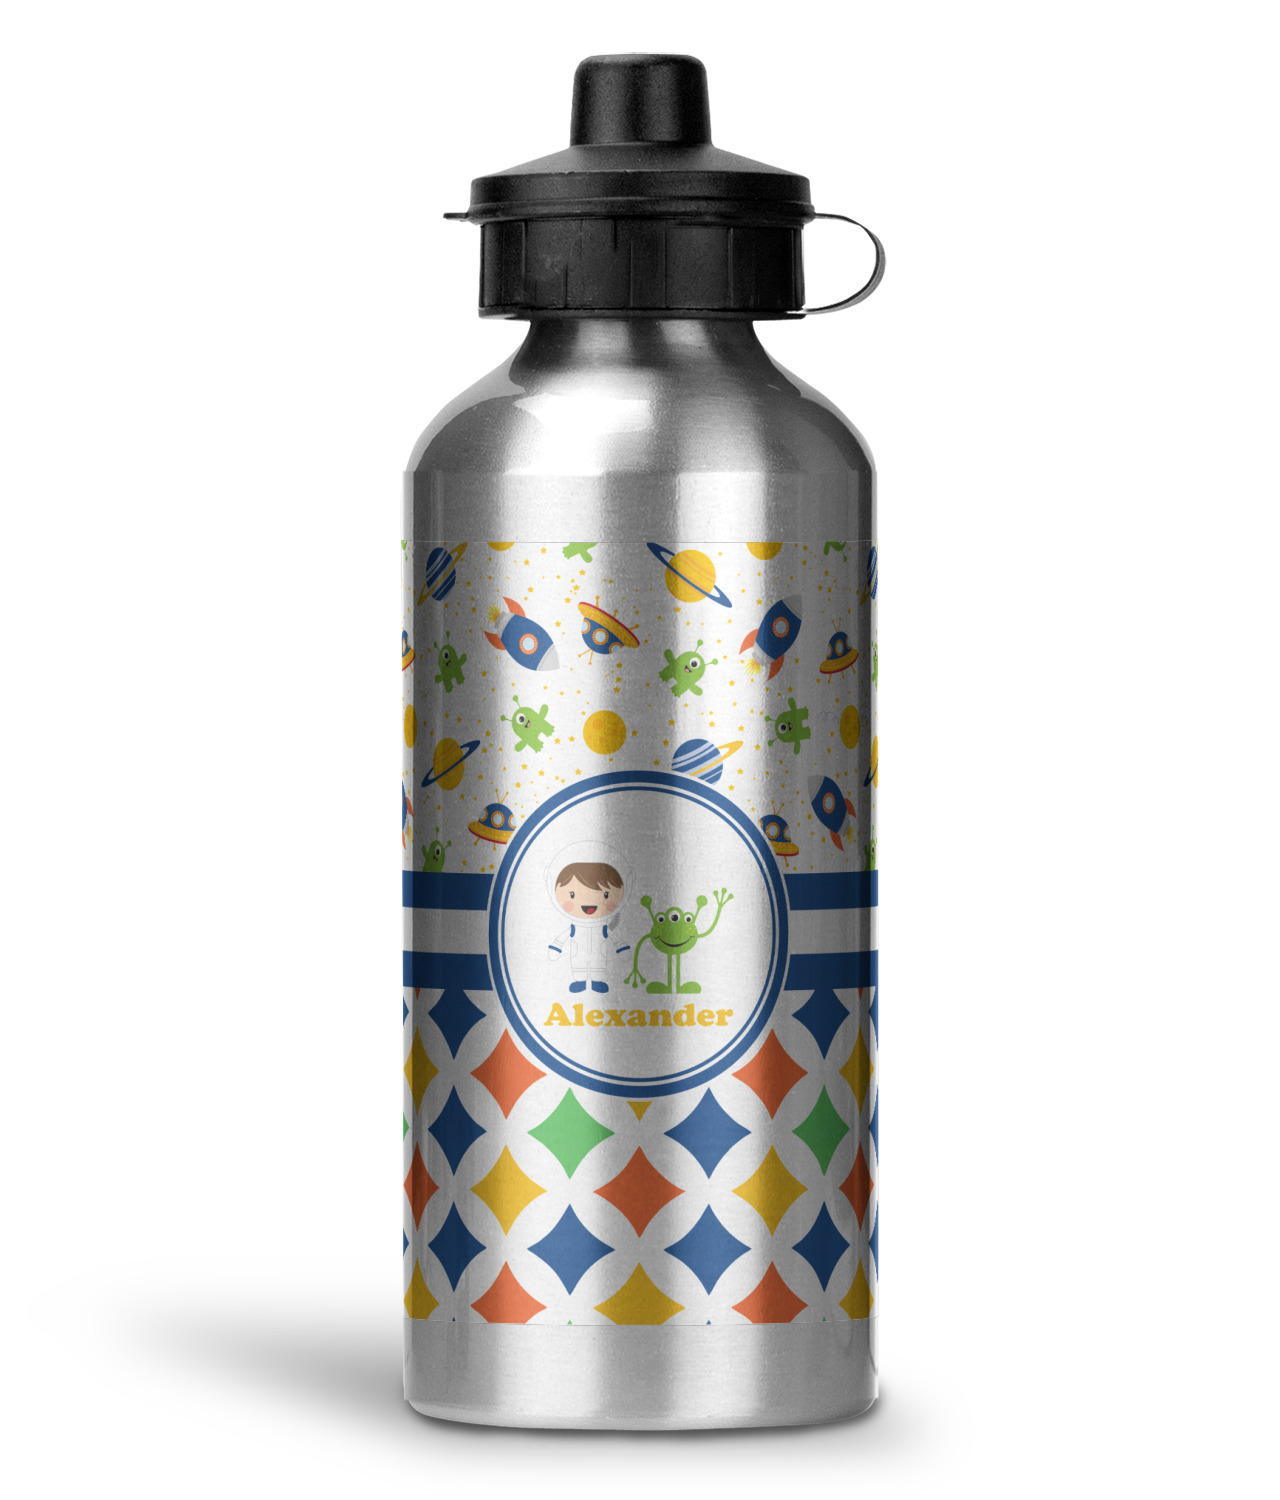 20 oz personalized aluminum water bottle